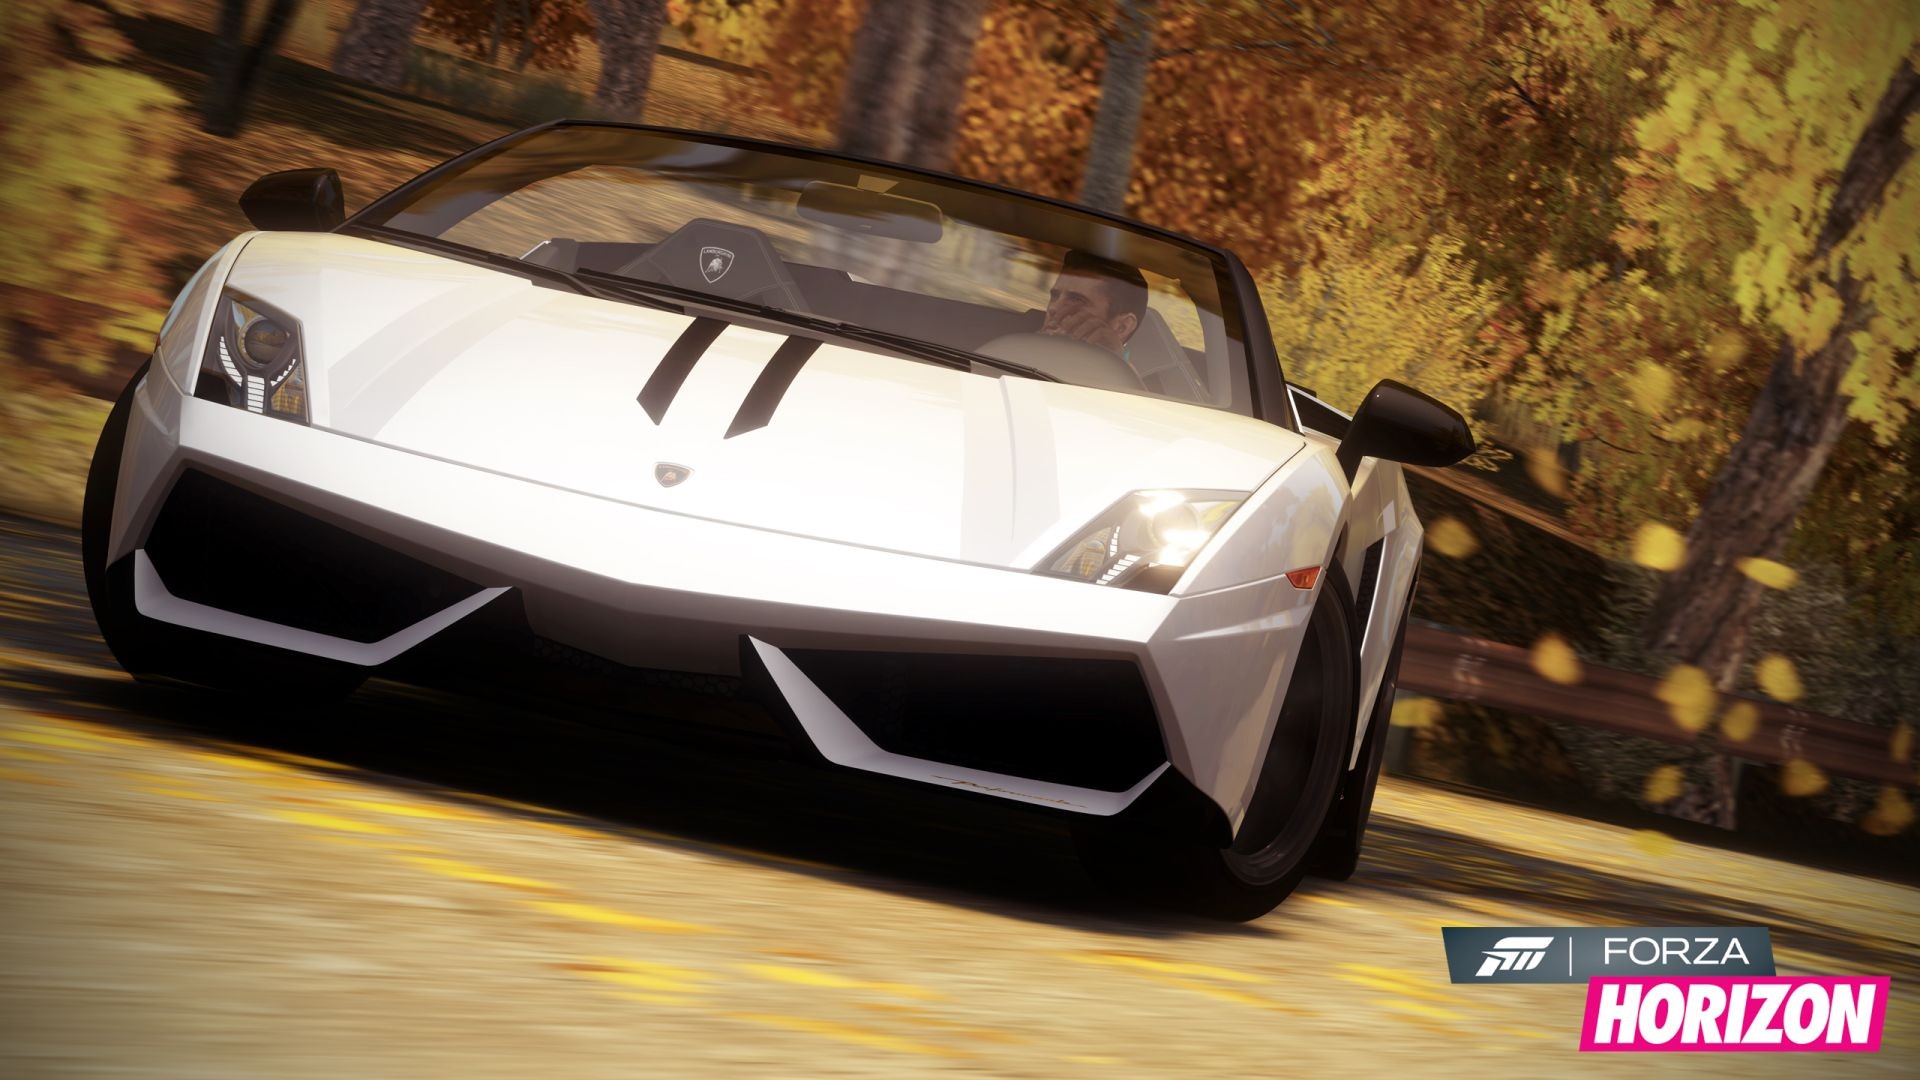 Forza reg. Форза хорайзон 2012. Forza Horizon 1. Forza Horizon 2. Lamborghini Gallardo Forza Horizon 4.